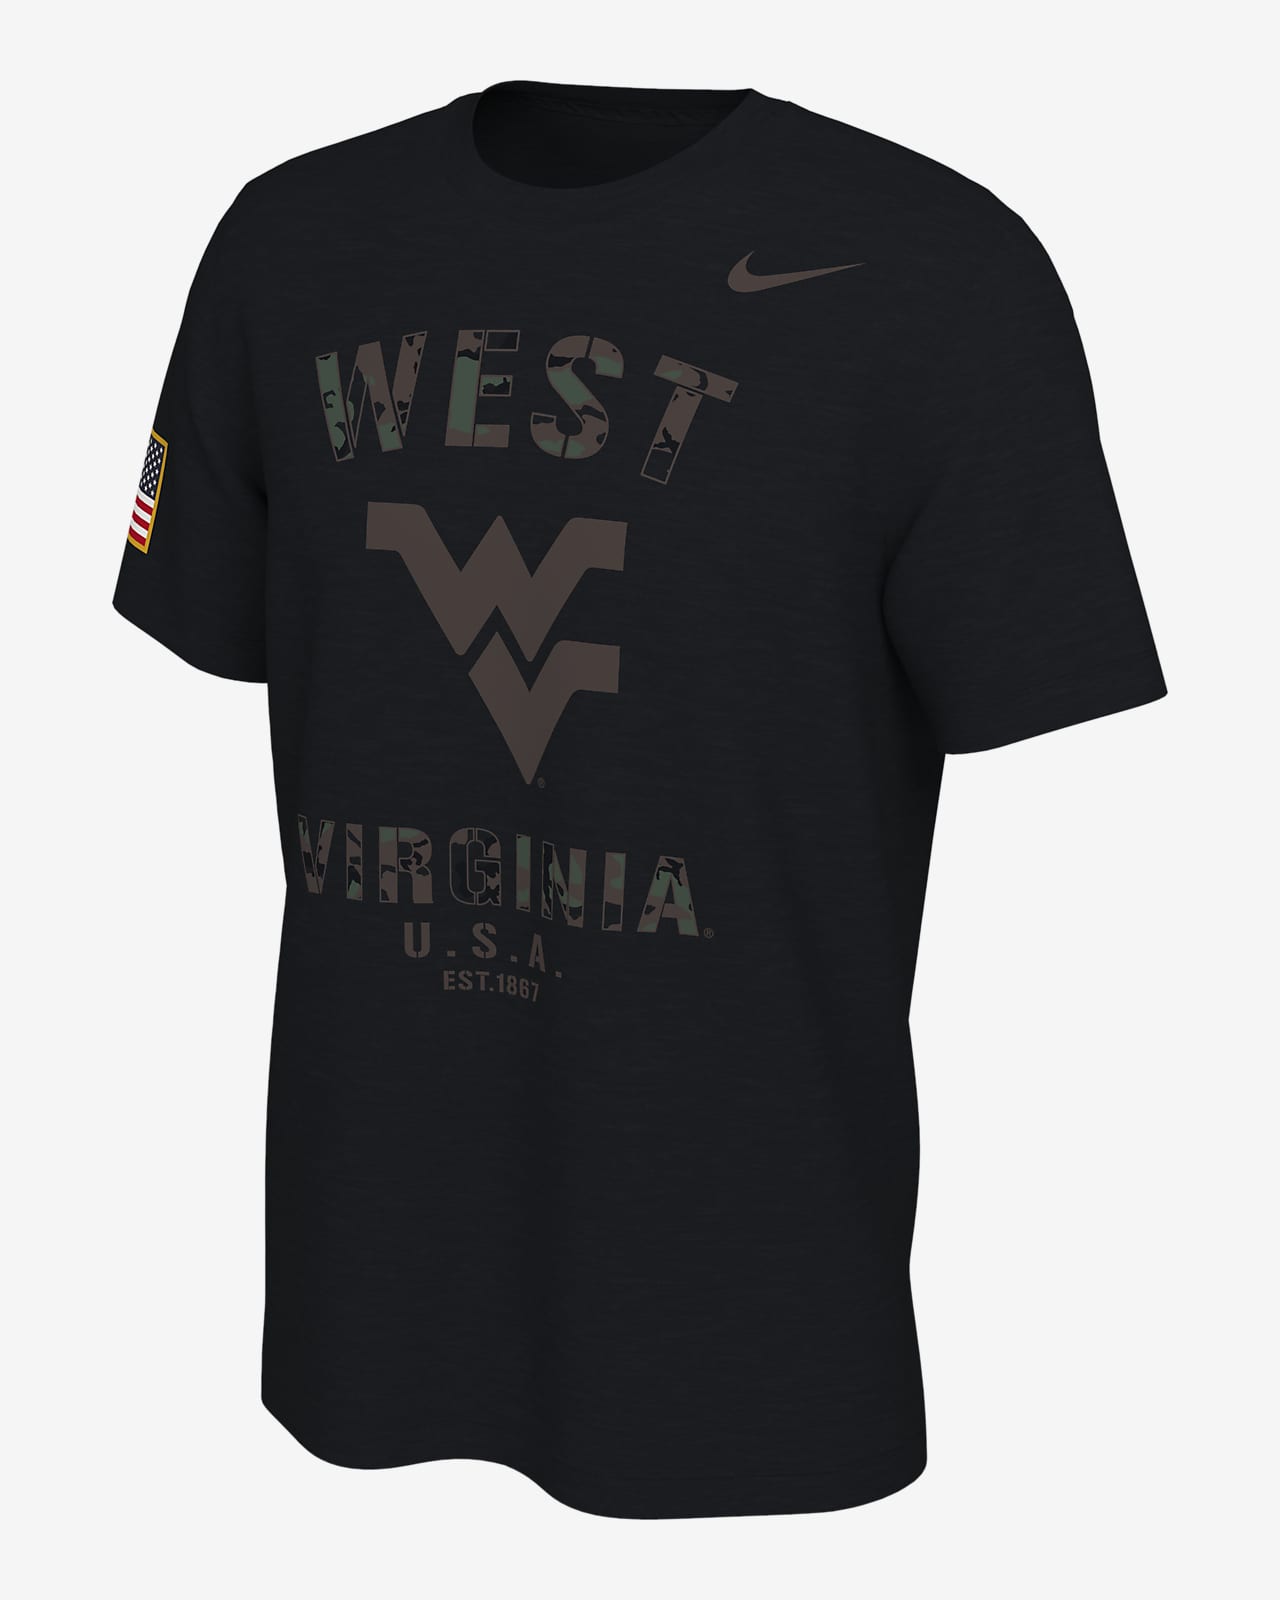 Nike College (West Virginia) Men's Graphic T-Shirt